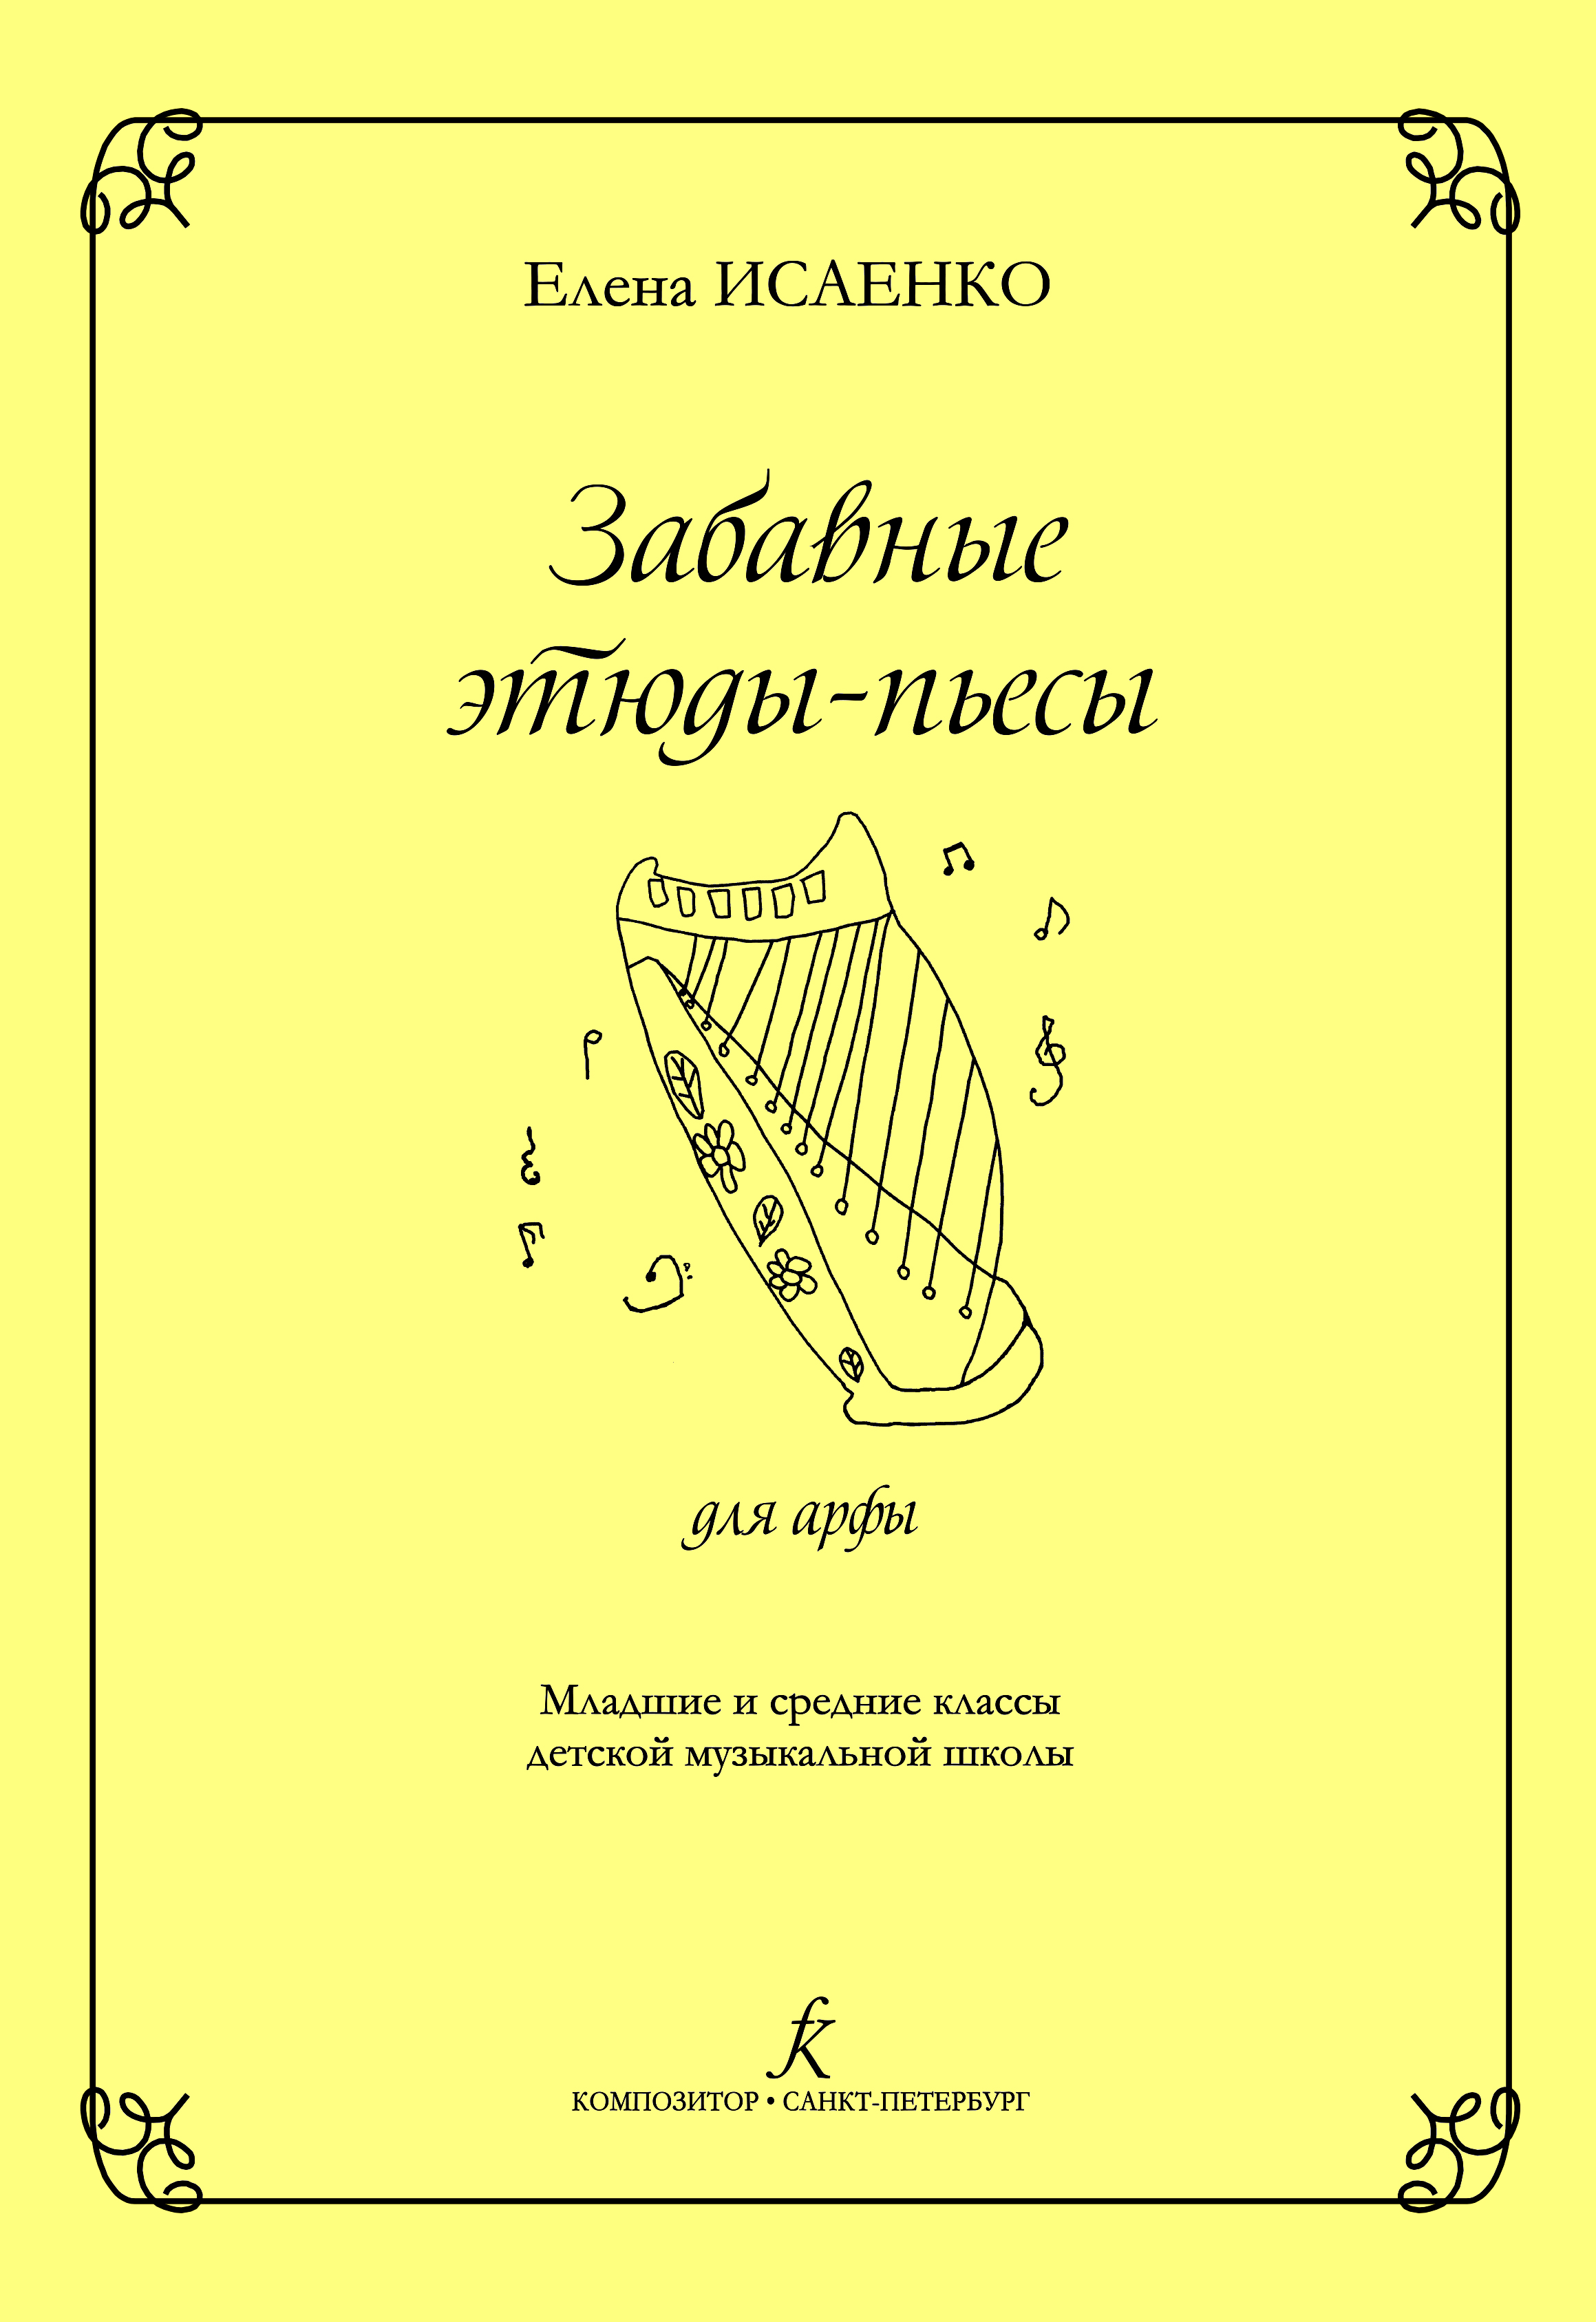 Isayenko E. Funny Etudes-Pieces for Harp. Junior forms of children music schoo